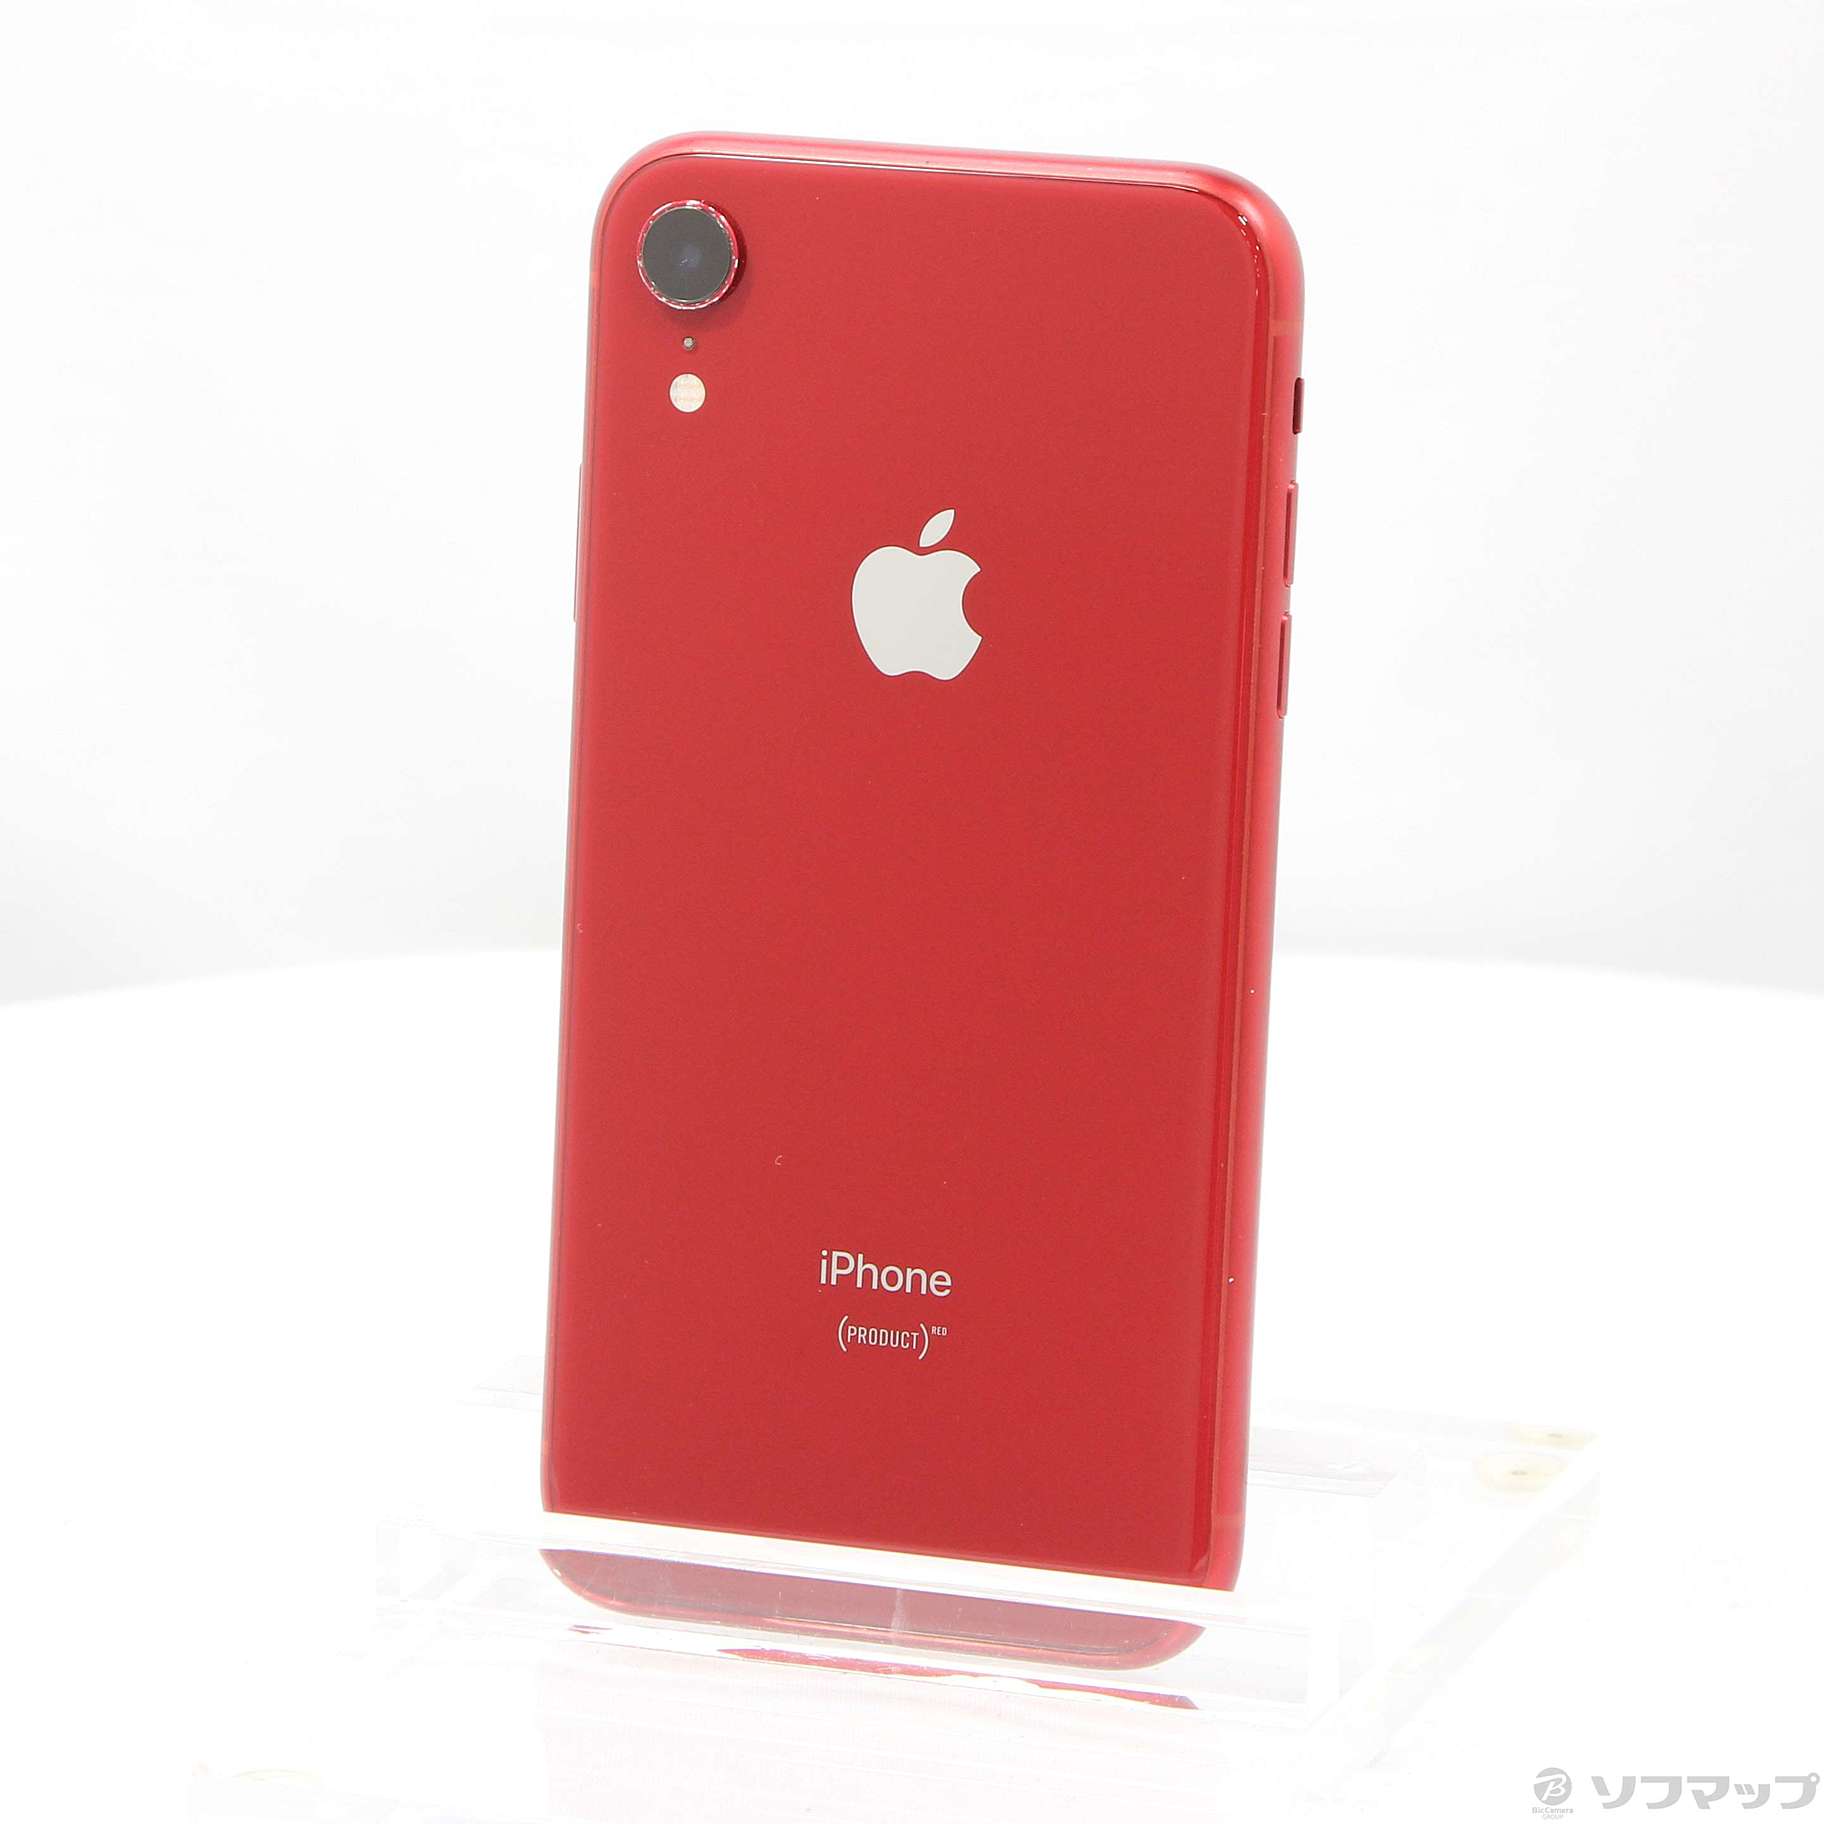 iPhone XR (PRODUCT)RED 64GB SIMフリー [レッド] 中古(白ロム)価格 ...